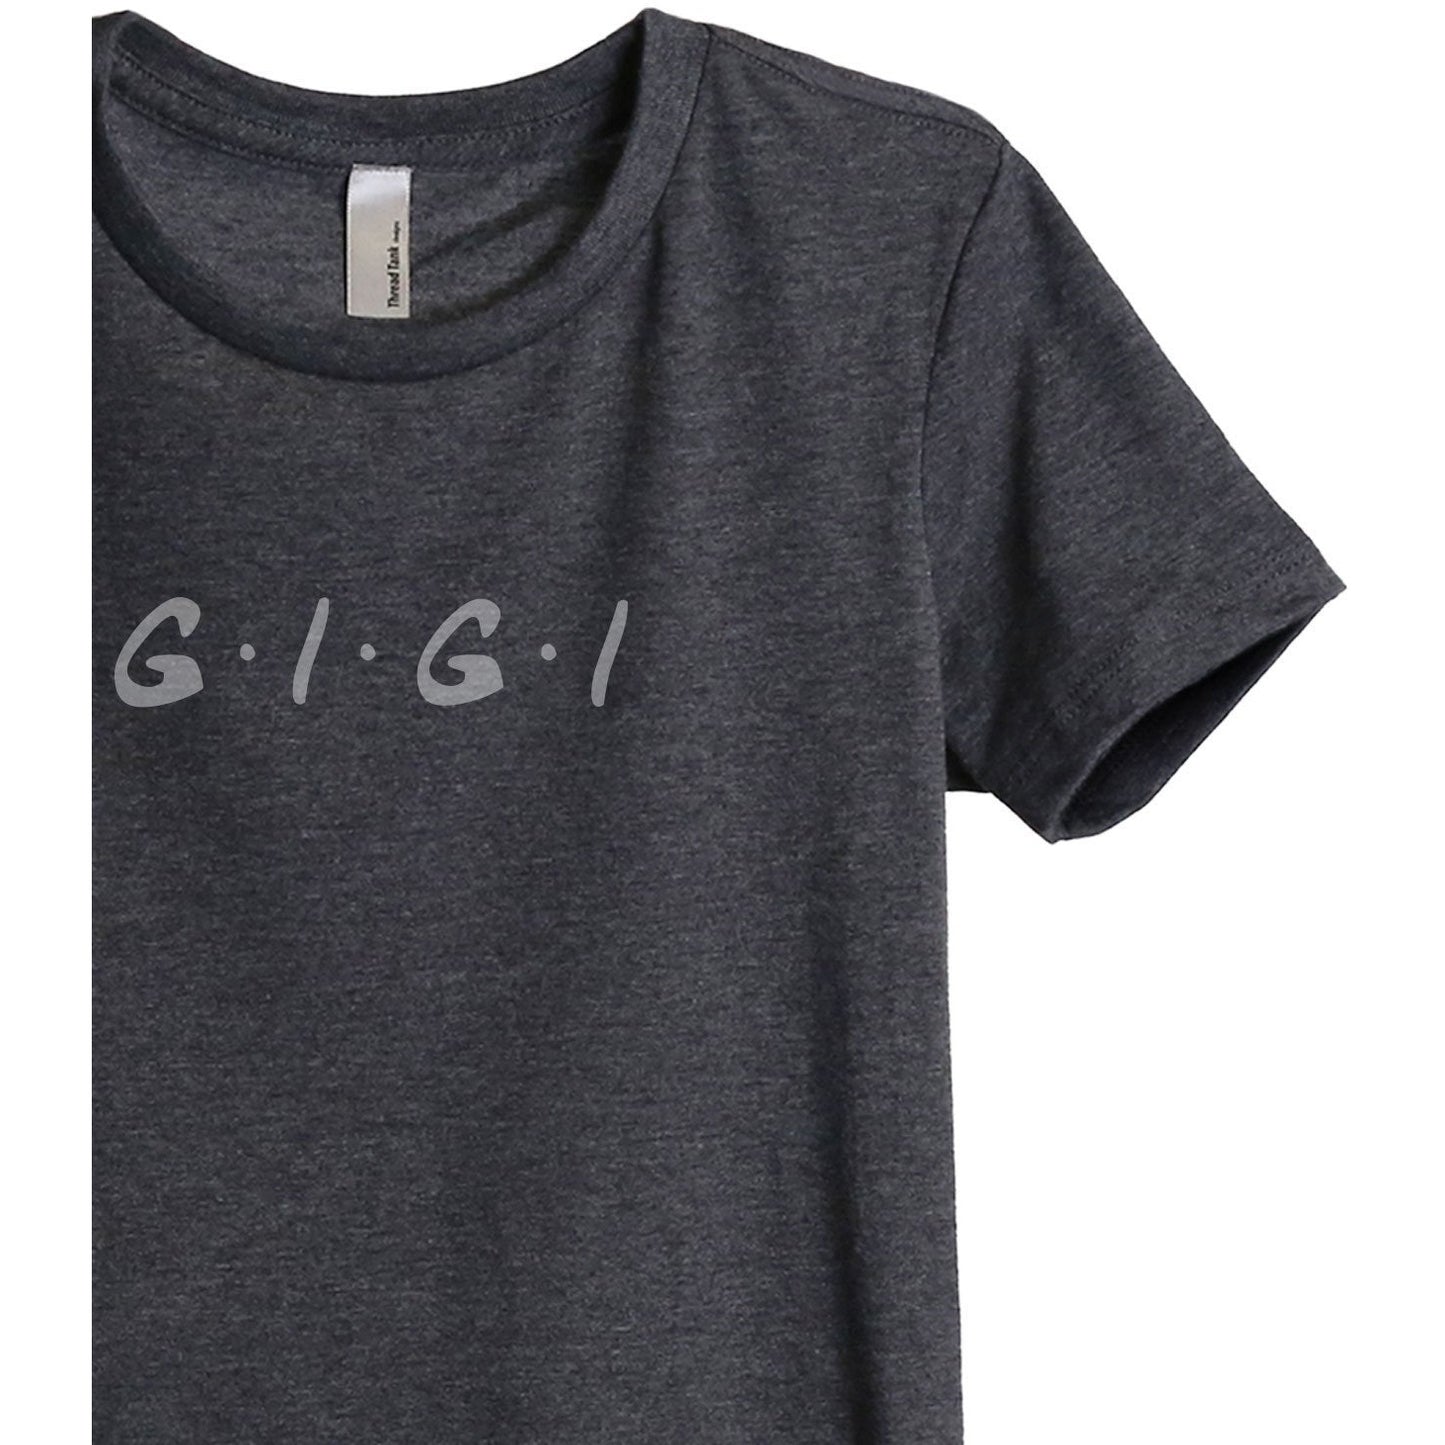 Gigi Friends Women's Relaxed Crewneck T-Shirt Top Tee Charcoal Grey Zoom Details